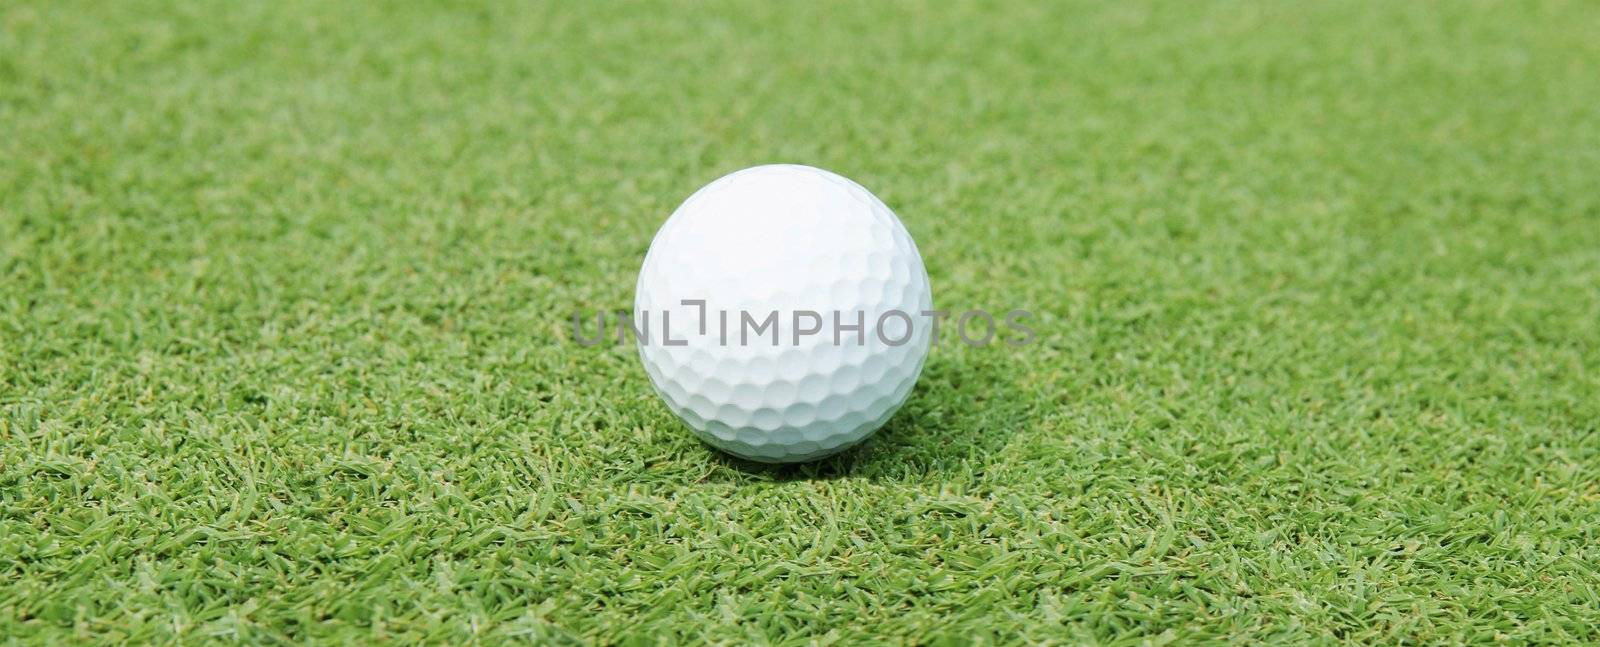 Golf Ball on the Green Grass by ozaiachin